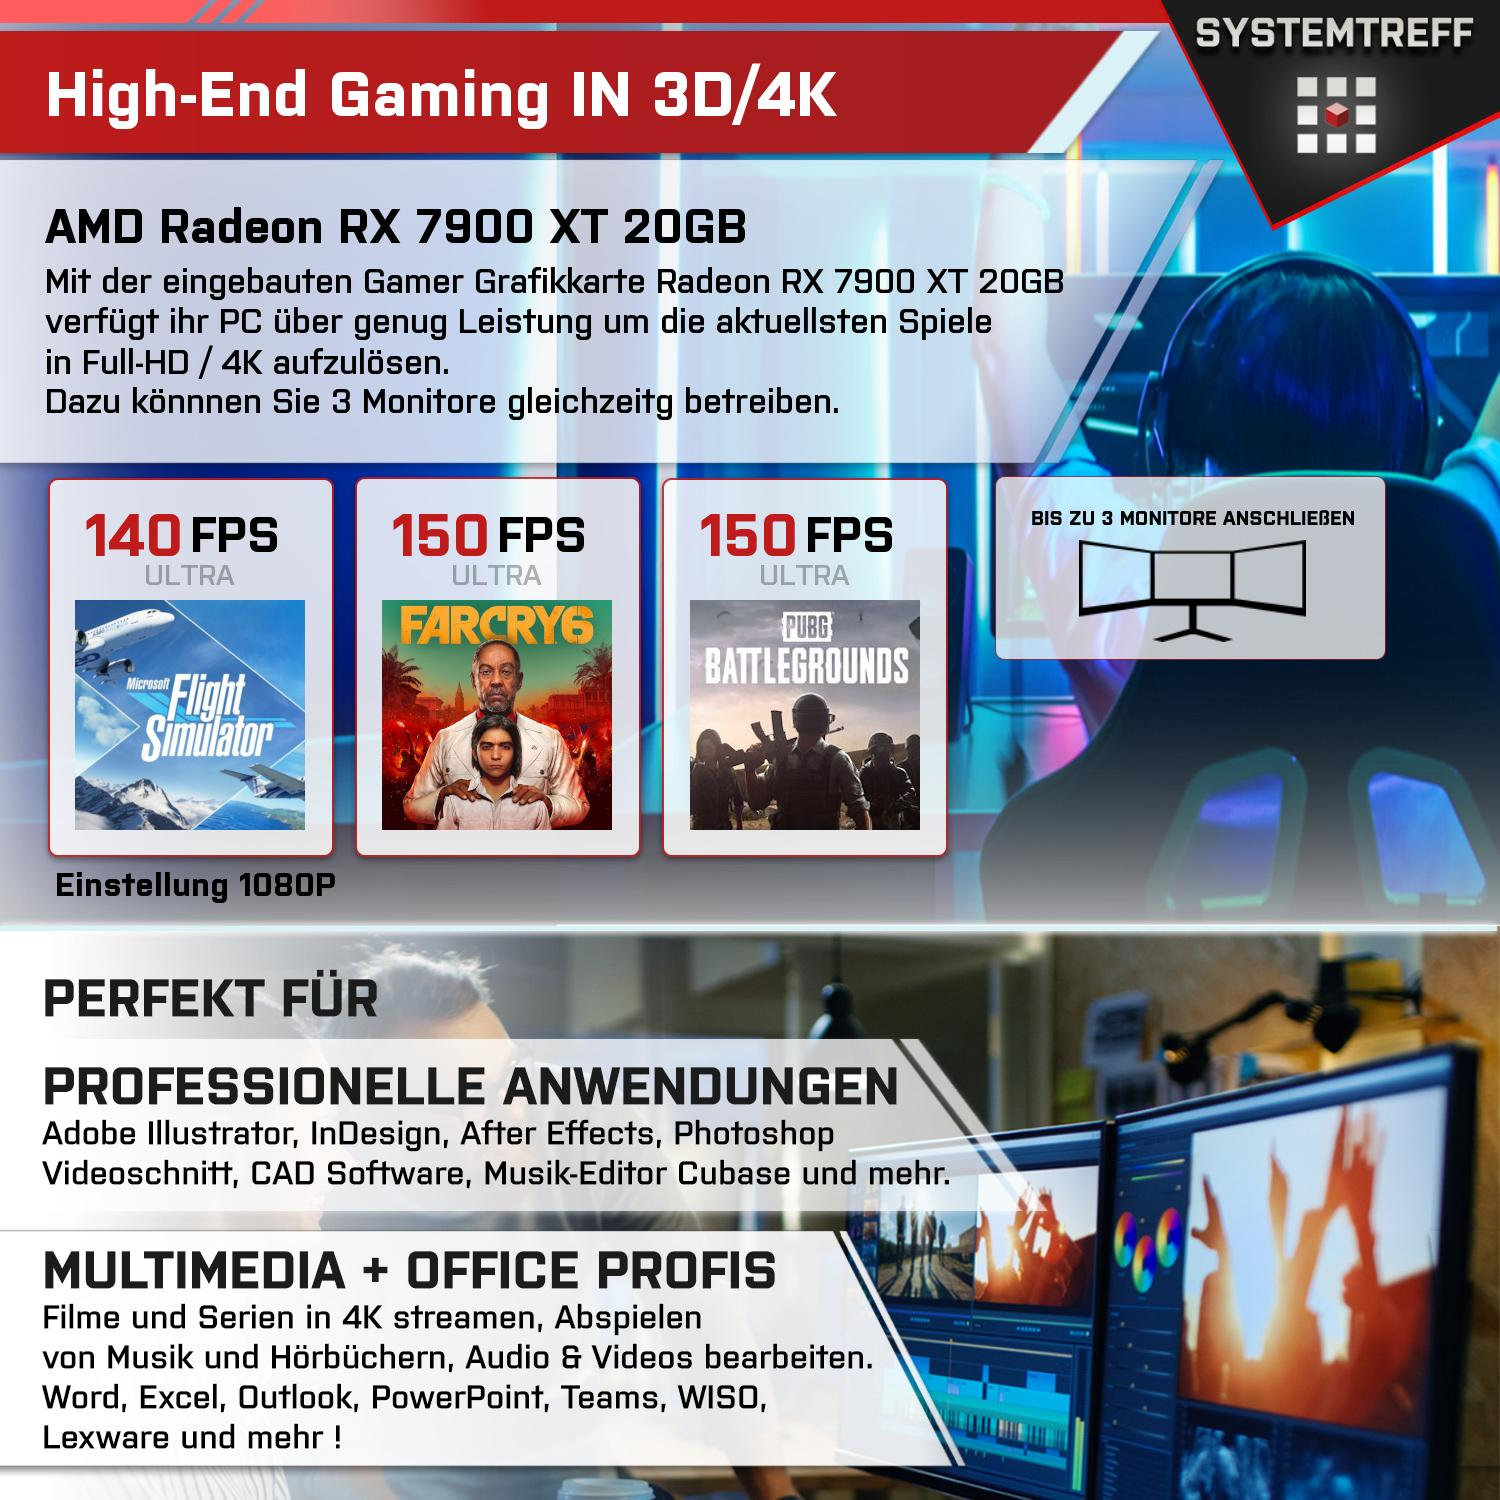 GB Core XT Windows AMD RX Gaming 1000 Intel® mSSD, RAM, Gaming PC Pro, 11 SYSTEMTREFF Prozessor, mit High-End 32 GB Intel Radeon™ i9 Core™ i9-13900K, 7900